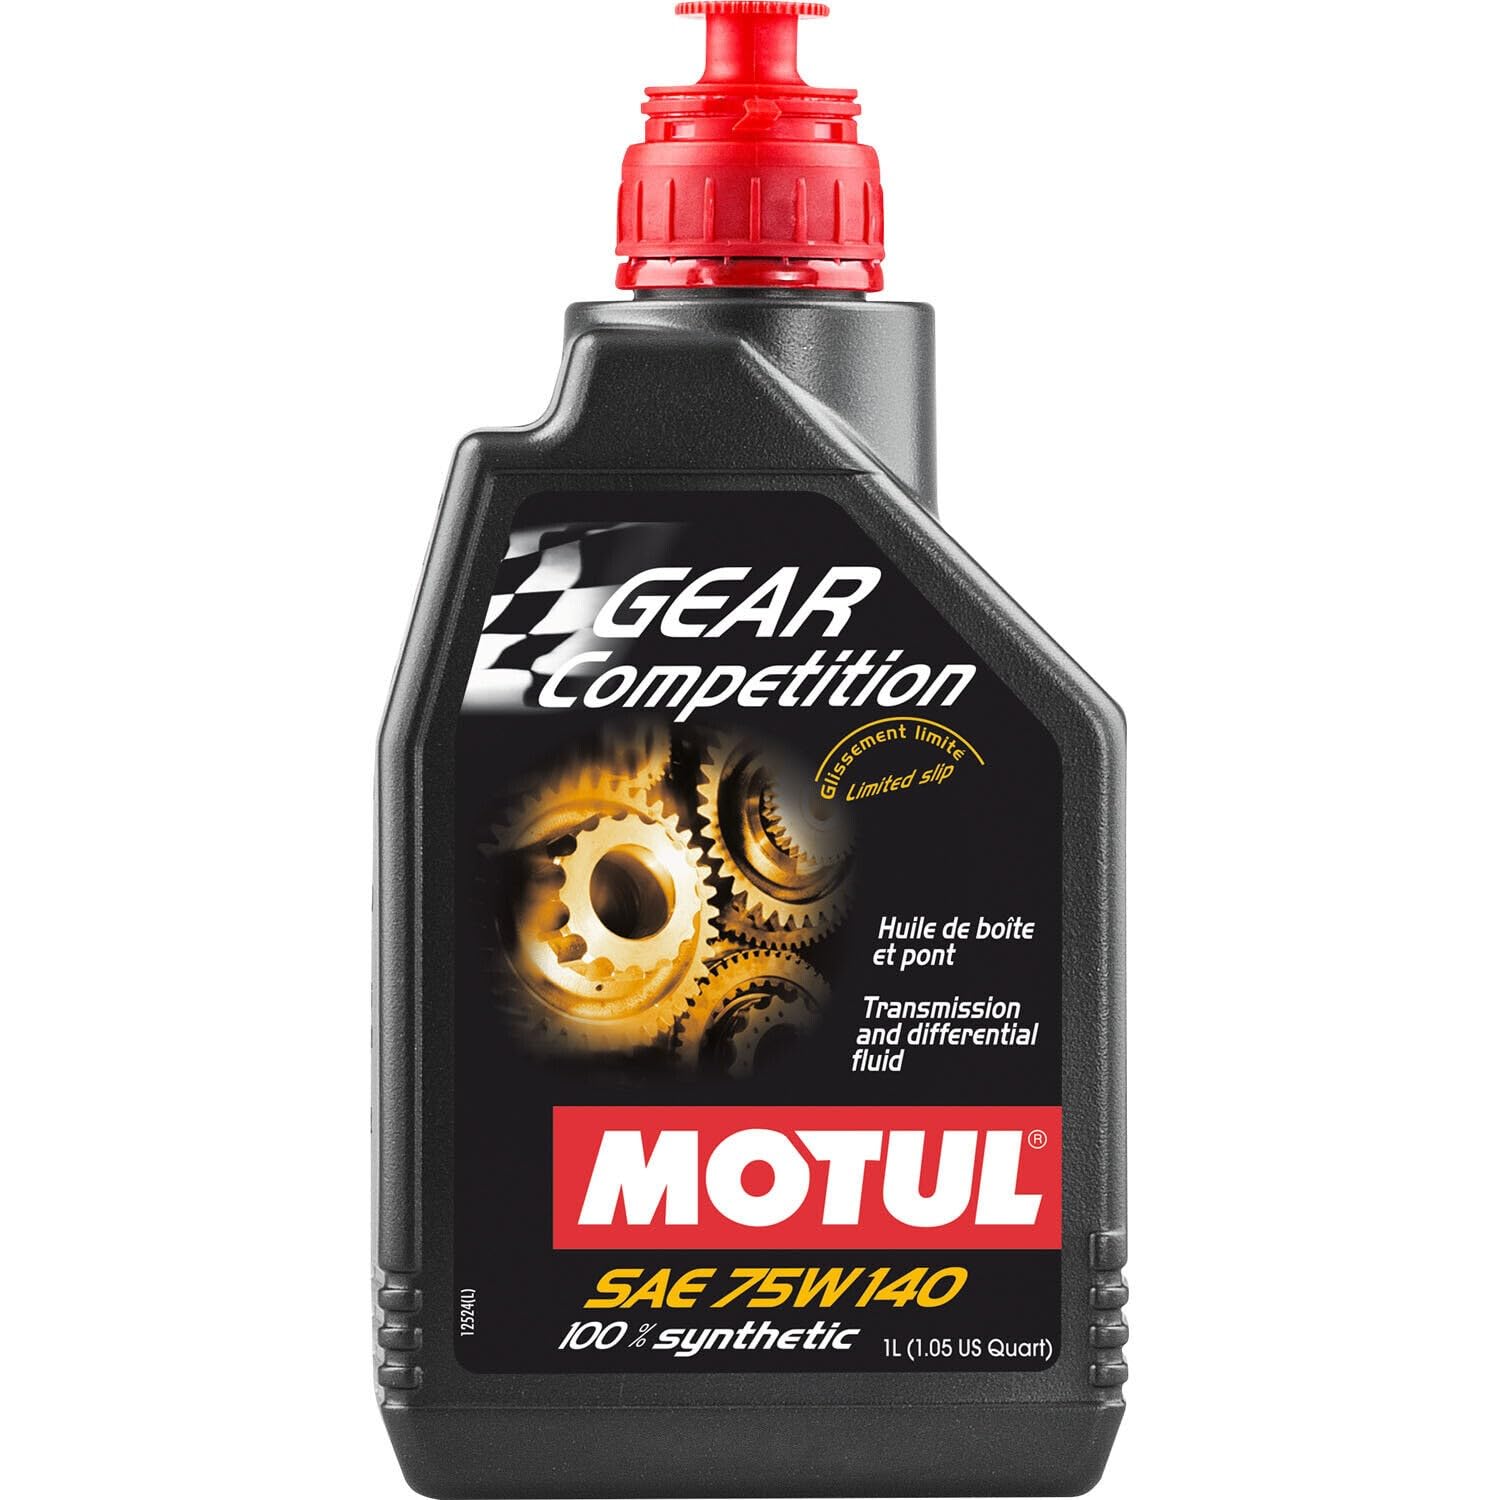 Motul Gear Competition 75W-140 1L von Motul